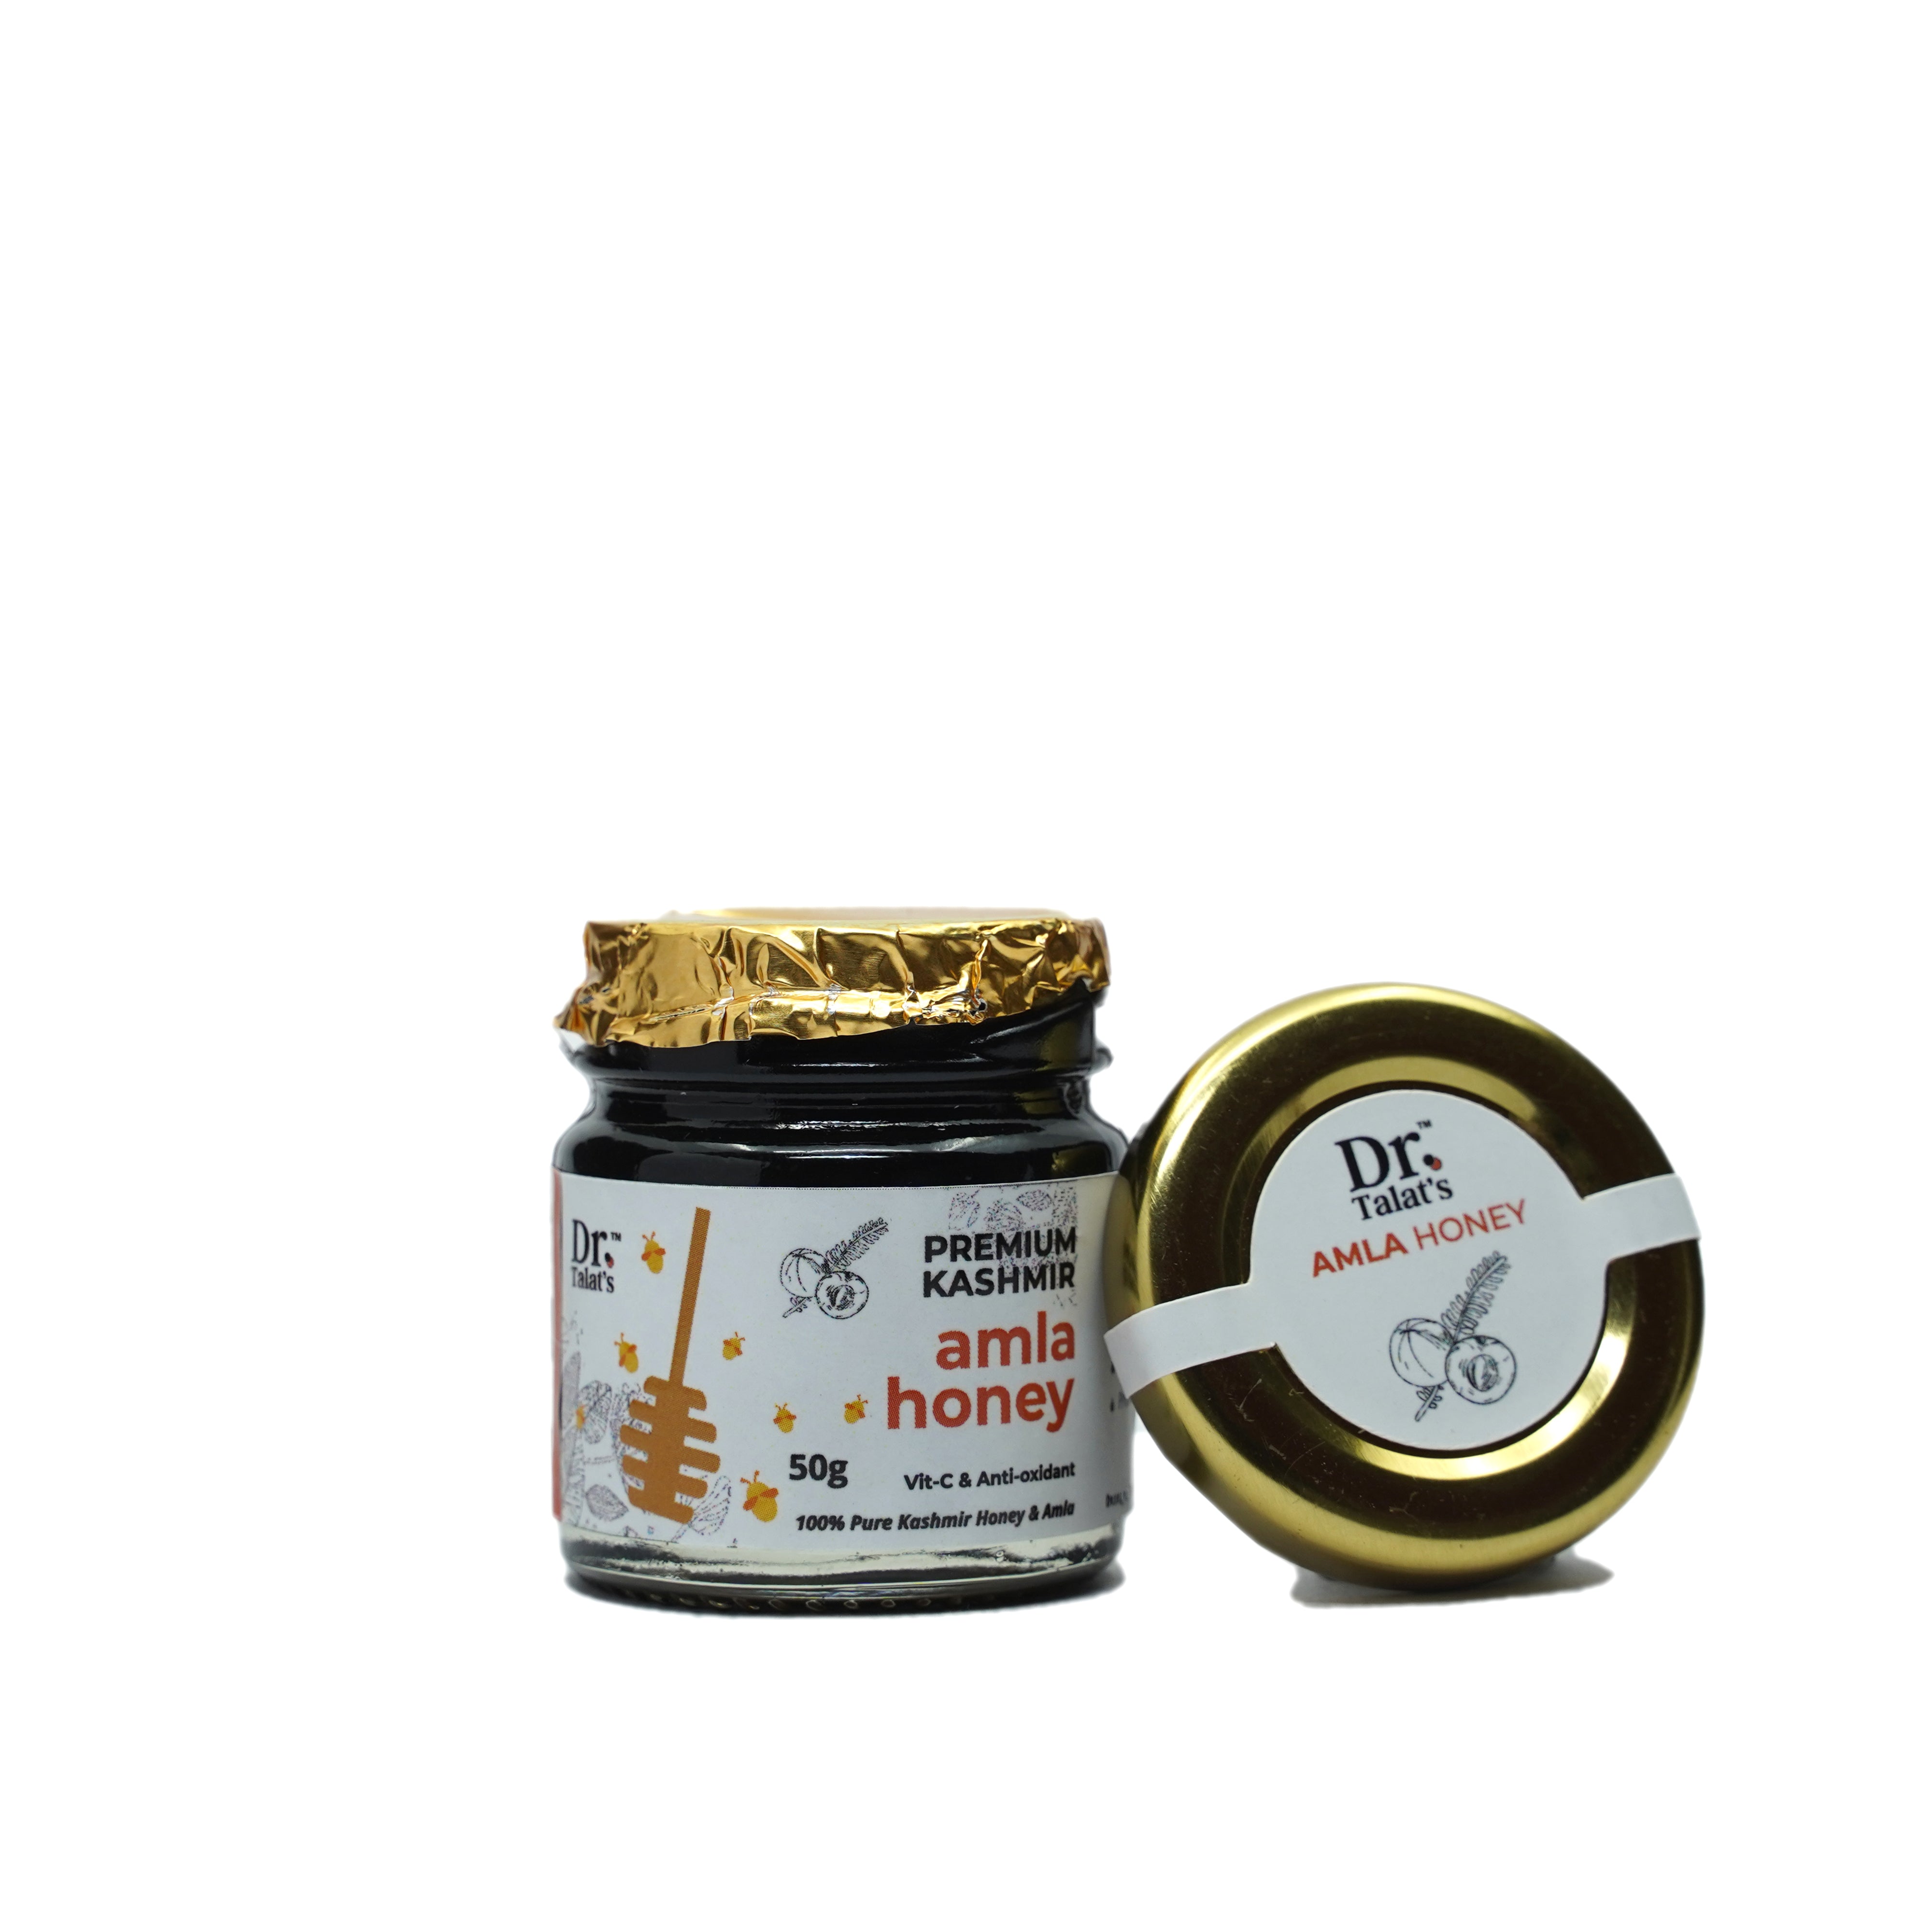 Premium Kashmir amla honey